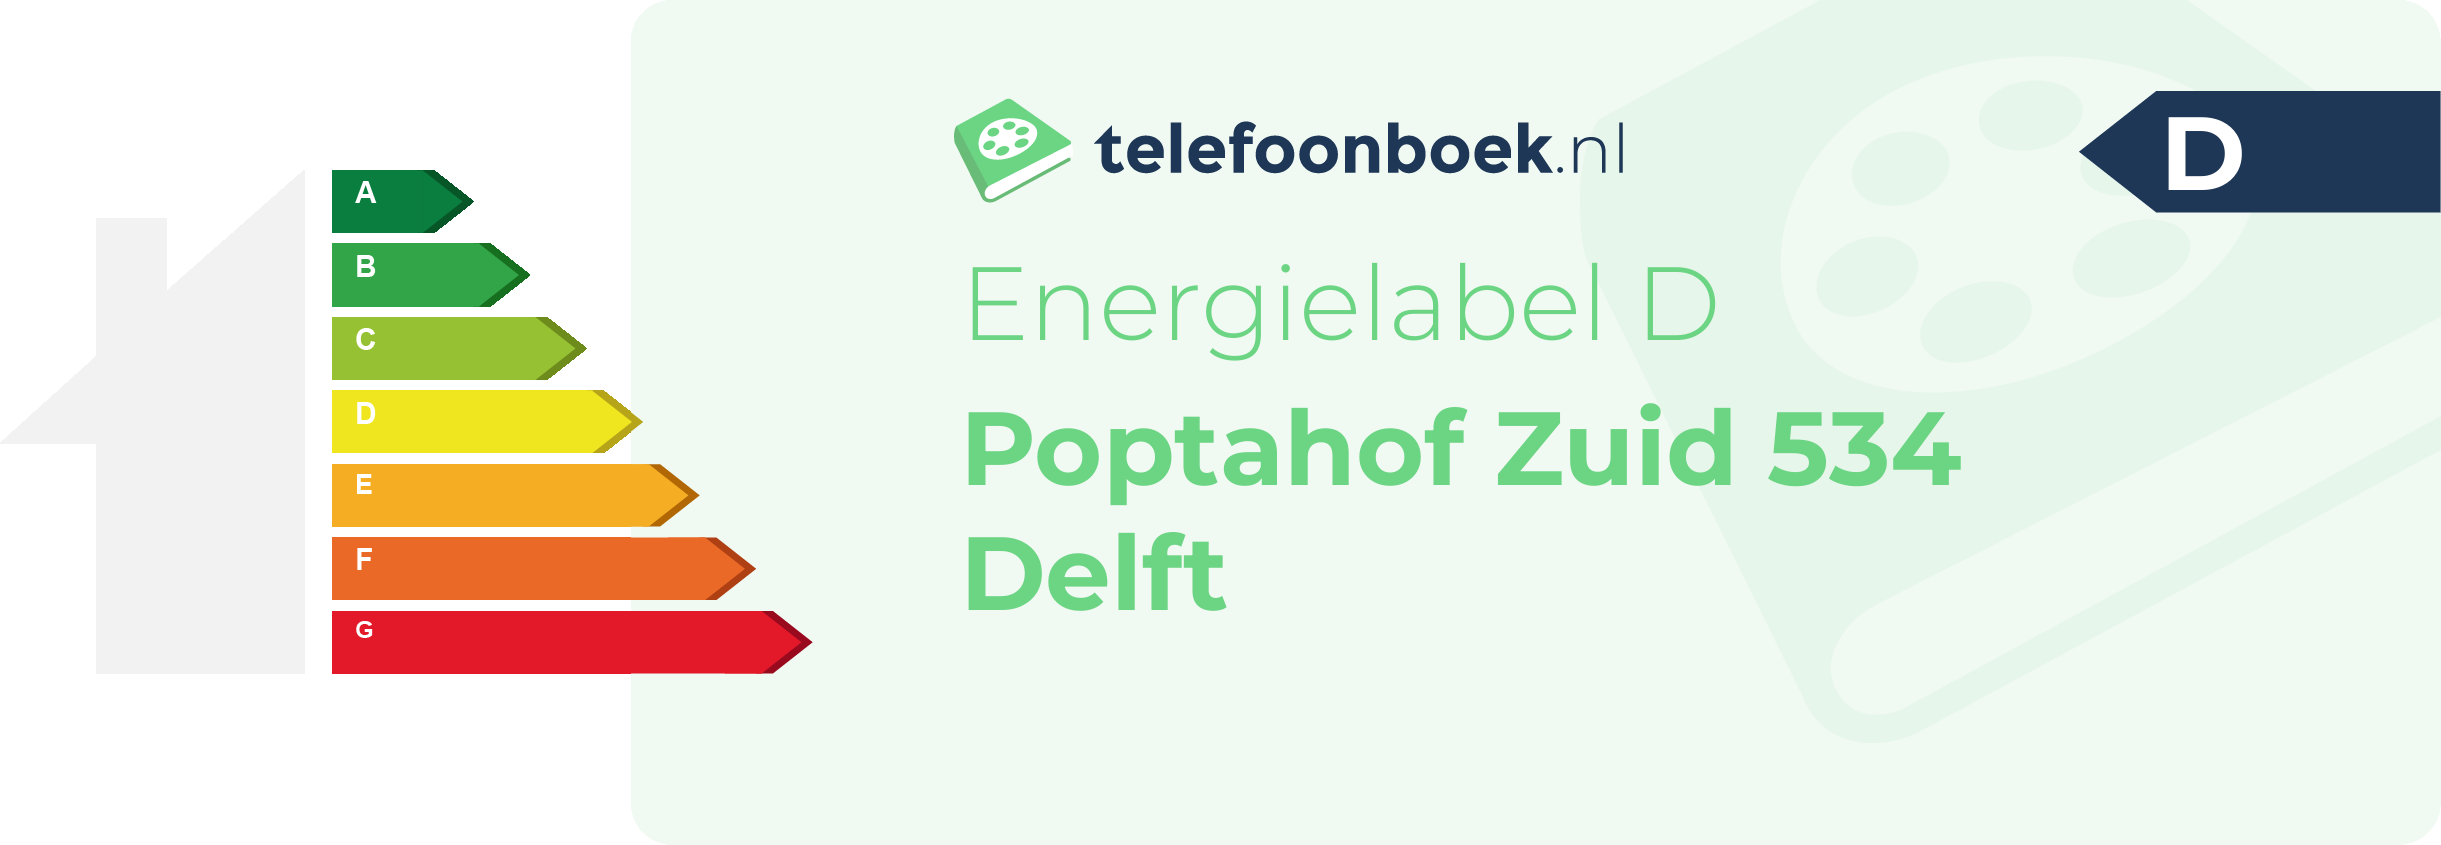 Energielabel Poptahof Zuid 534 Delft